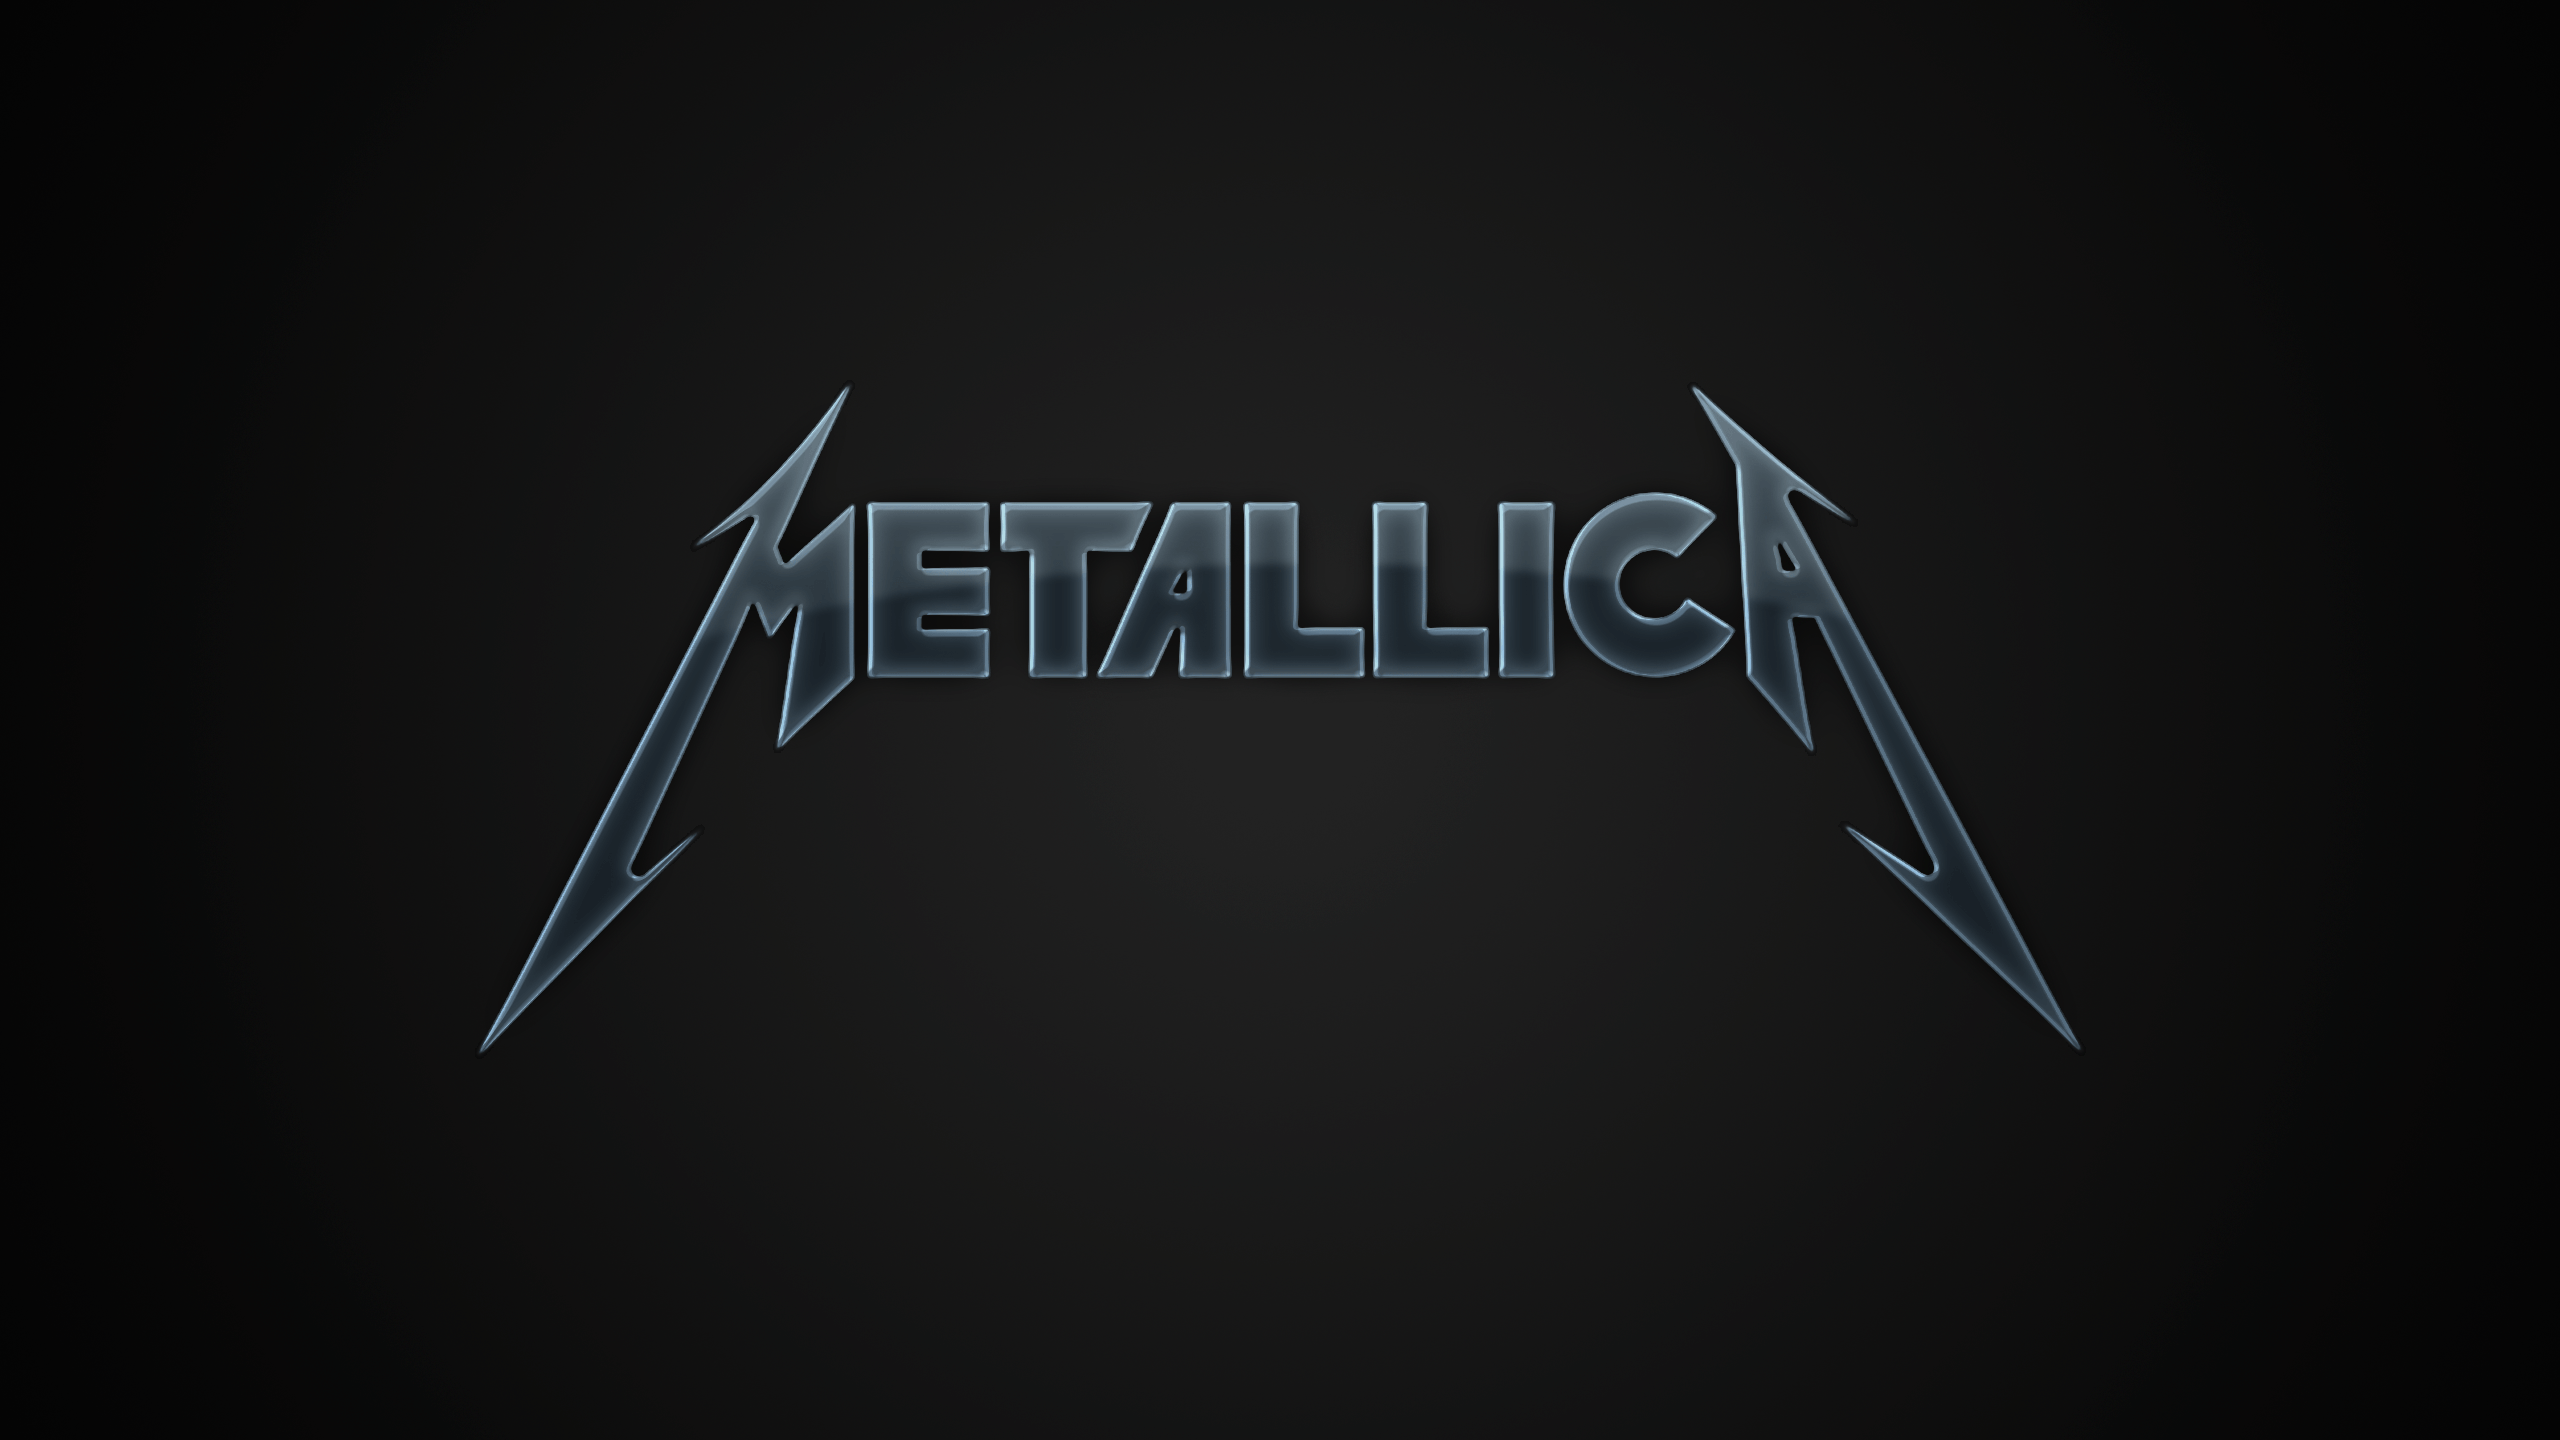 Metallica Original Logo - Metallica HD Background Wallpaper 17449